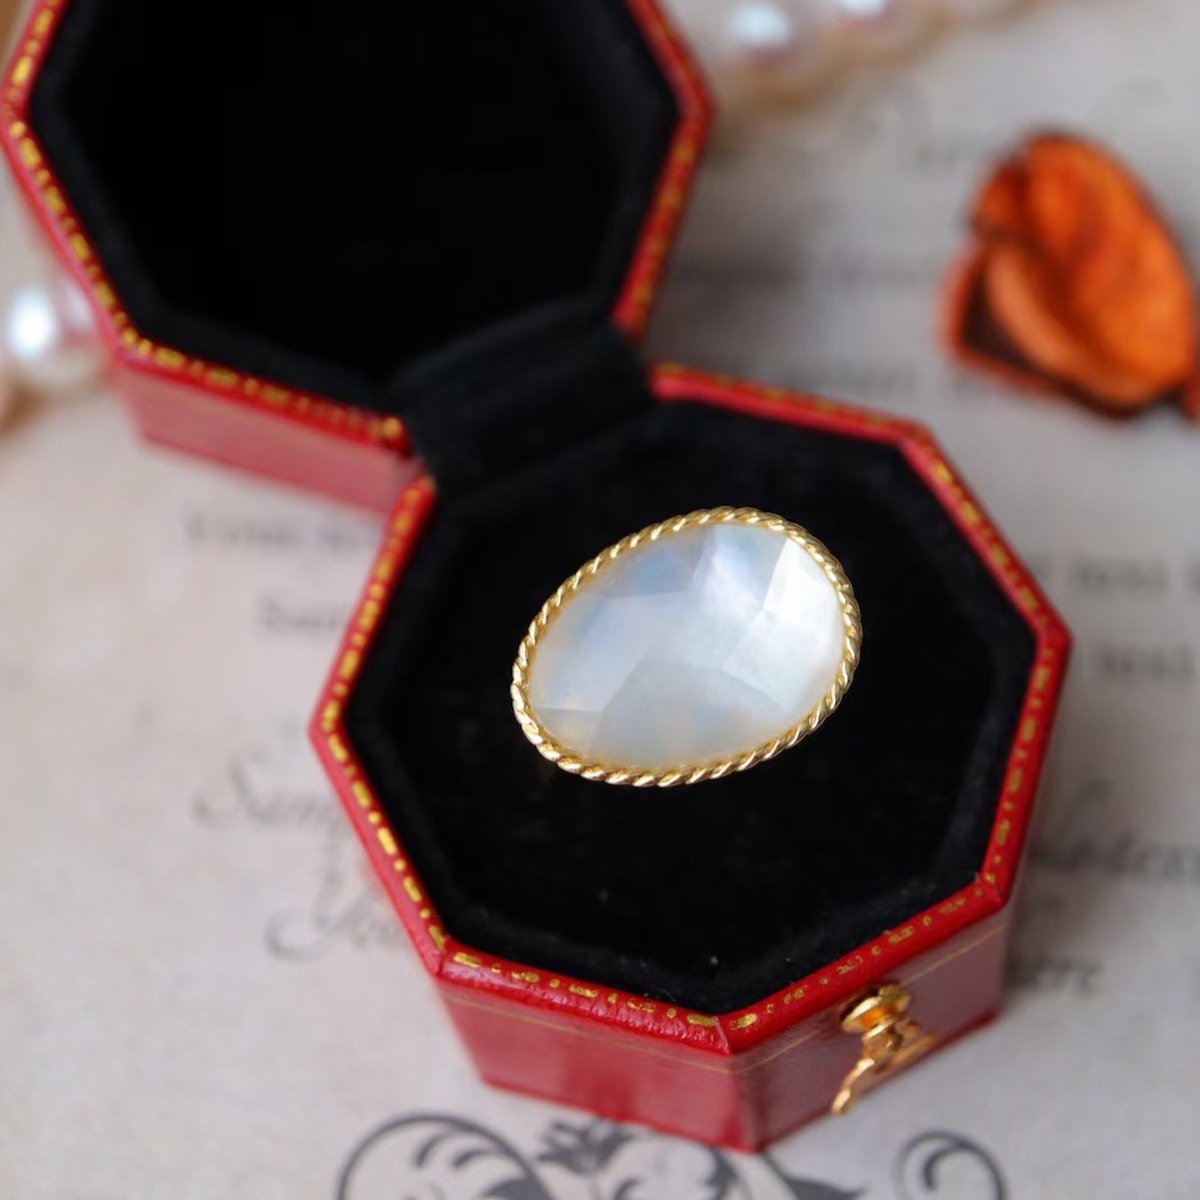 Parelmoer waterdruppel sieraden set - goud vermeil - verstelbare ring